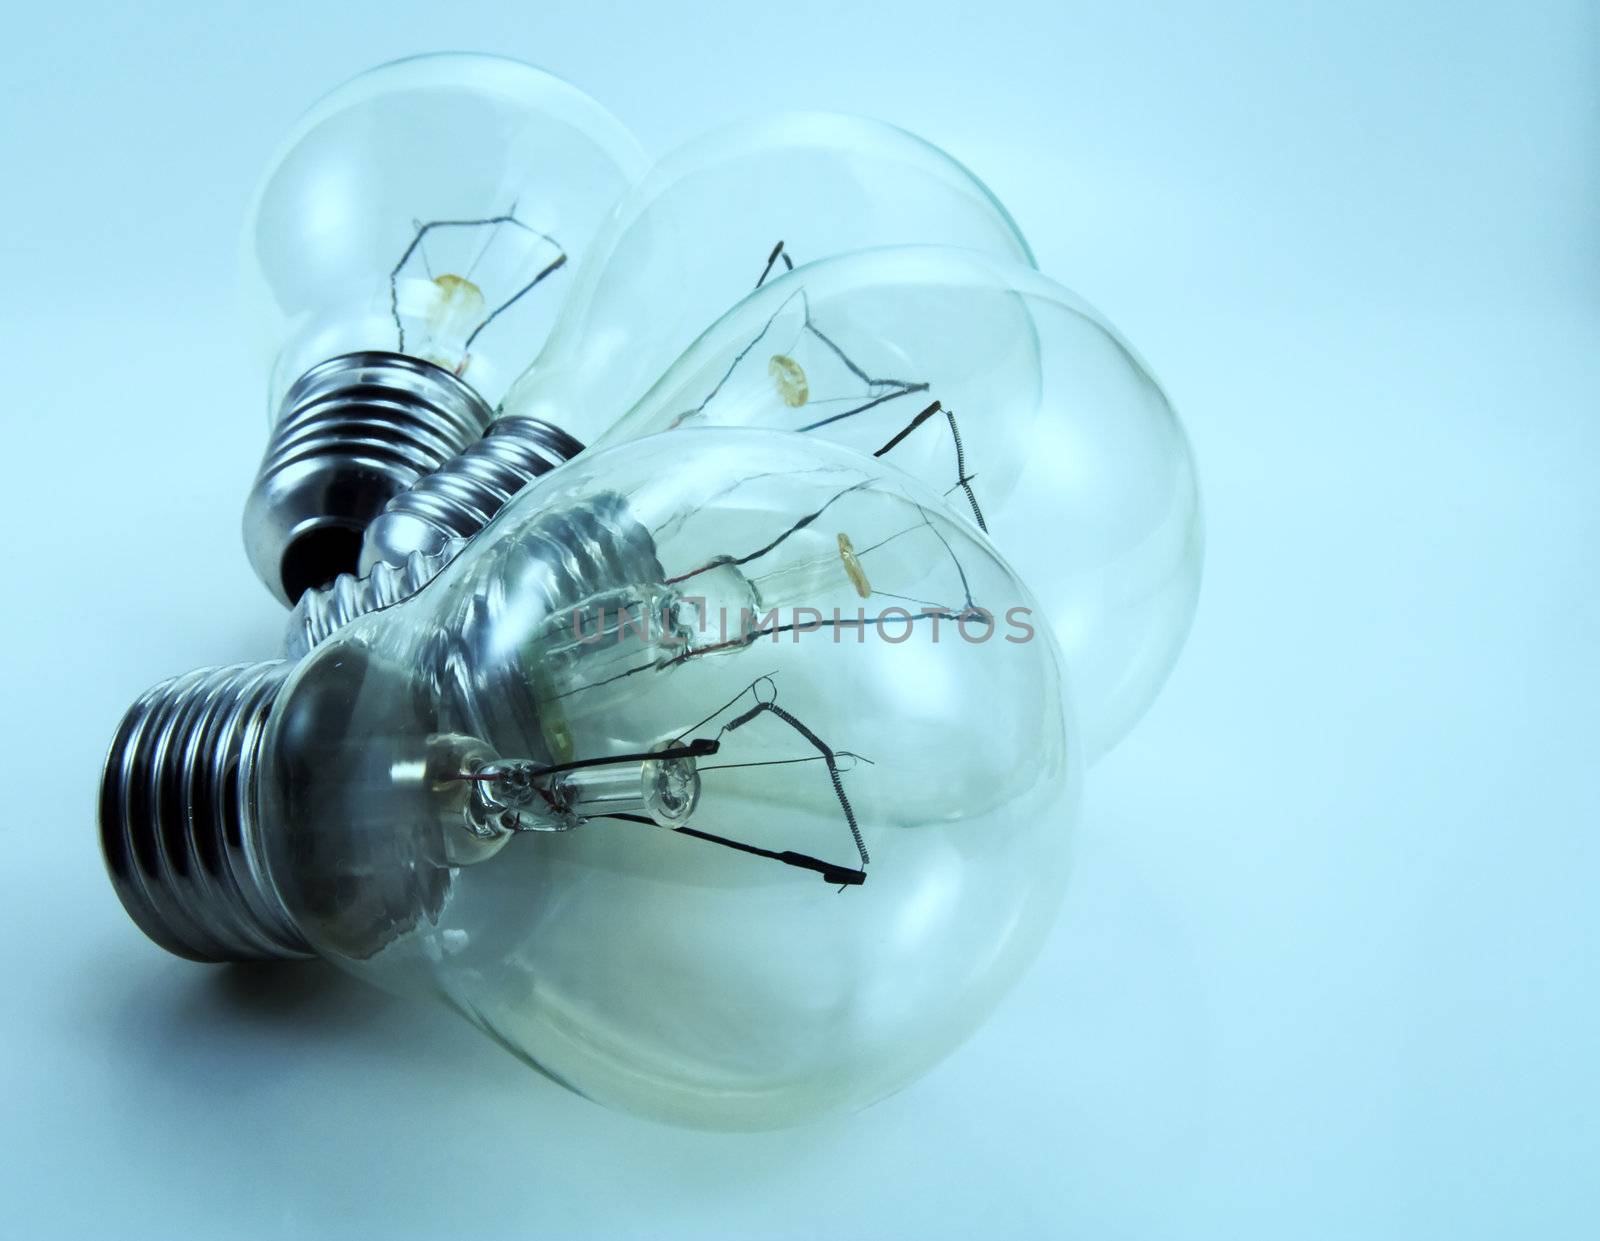 Four electric bulbs by serpl